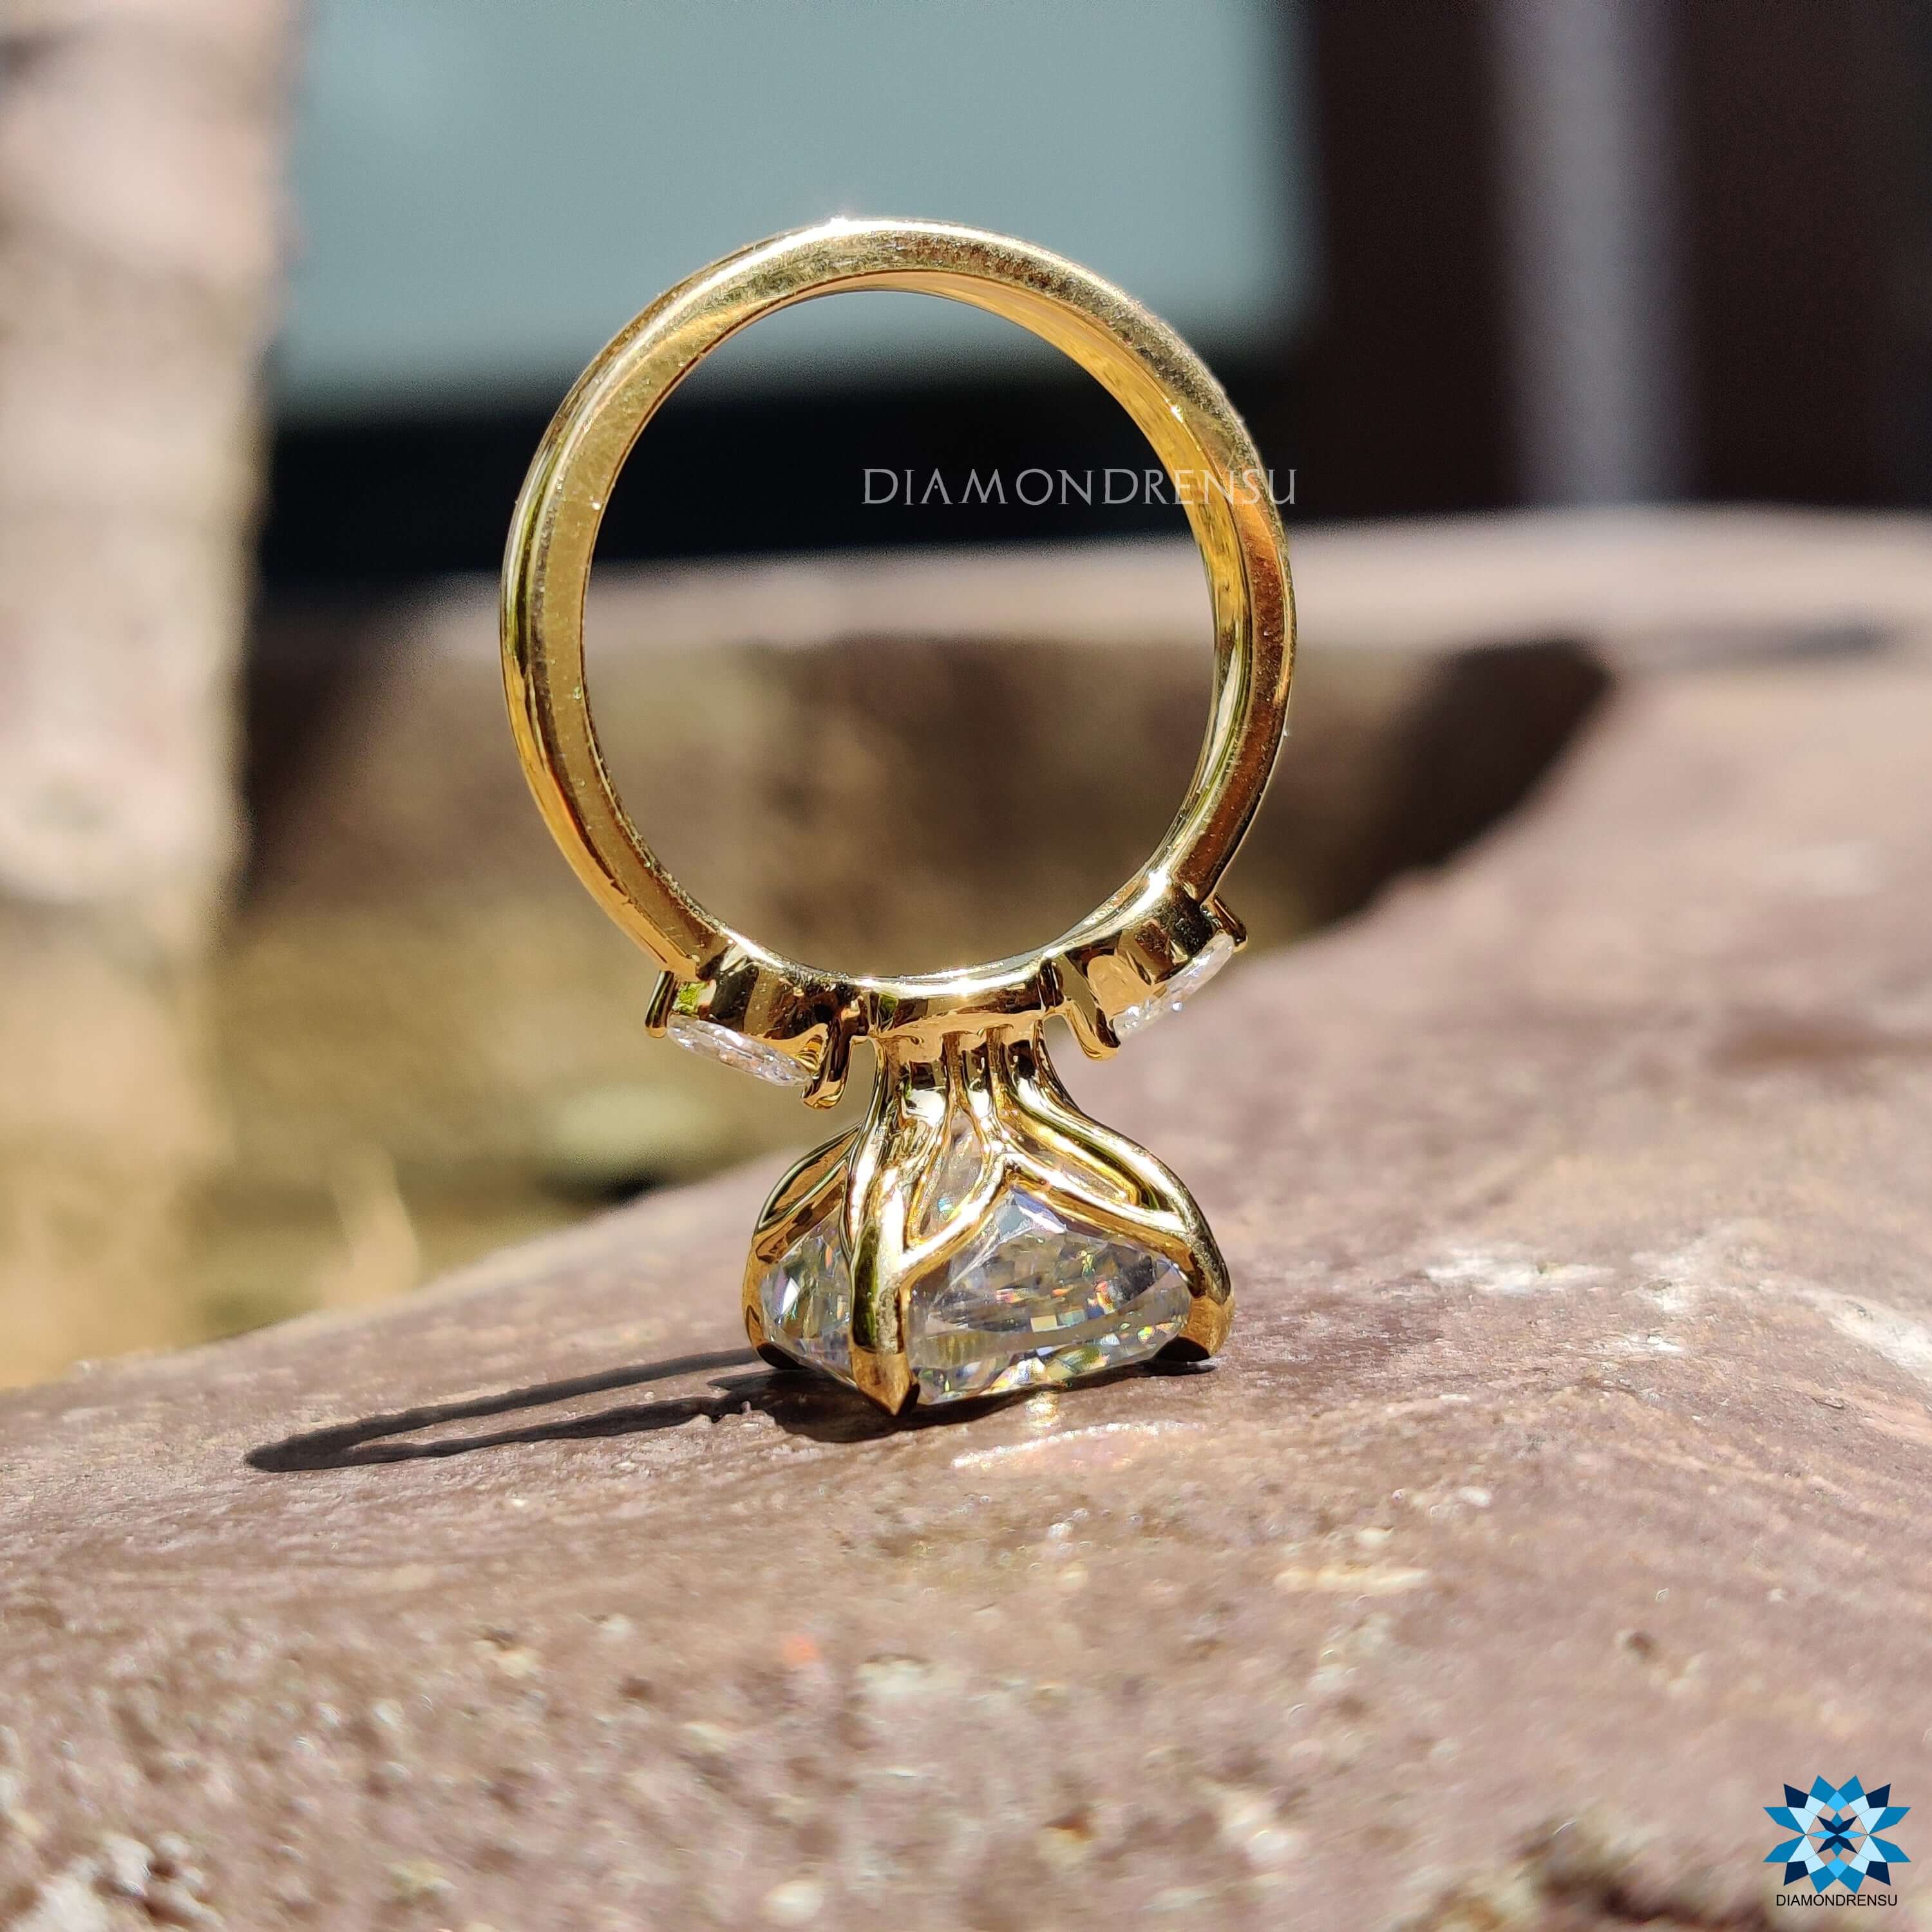 yellow gold ring - diamondrensu